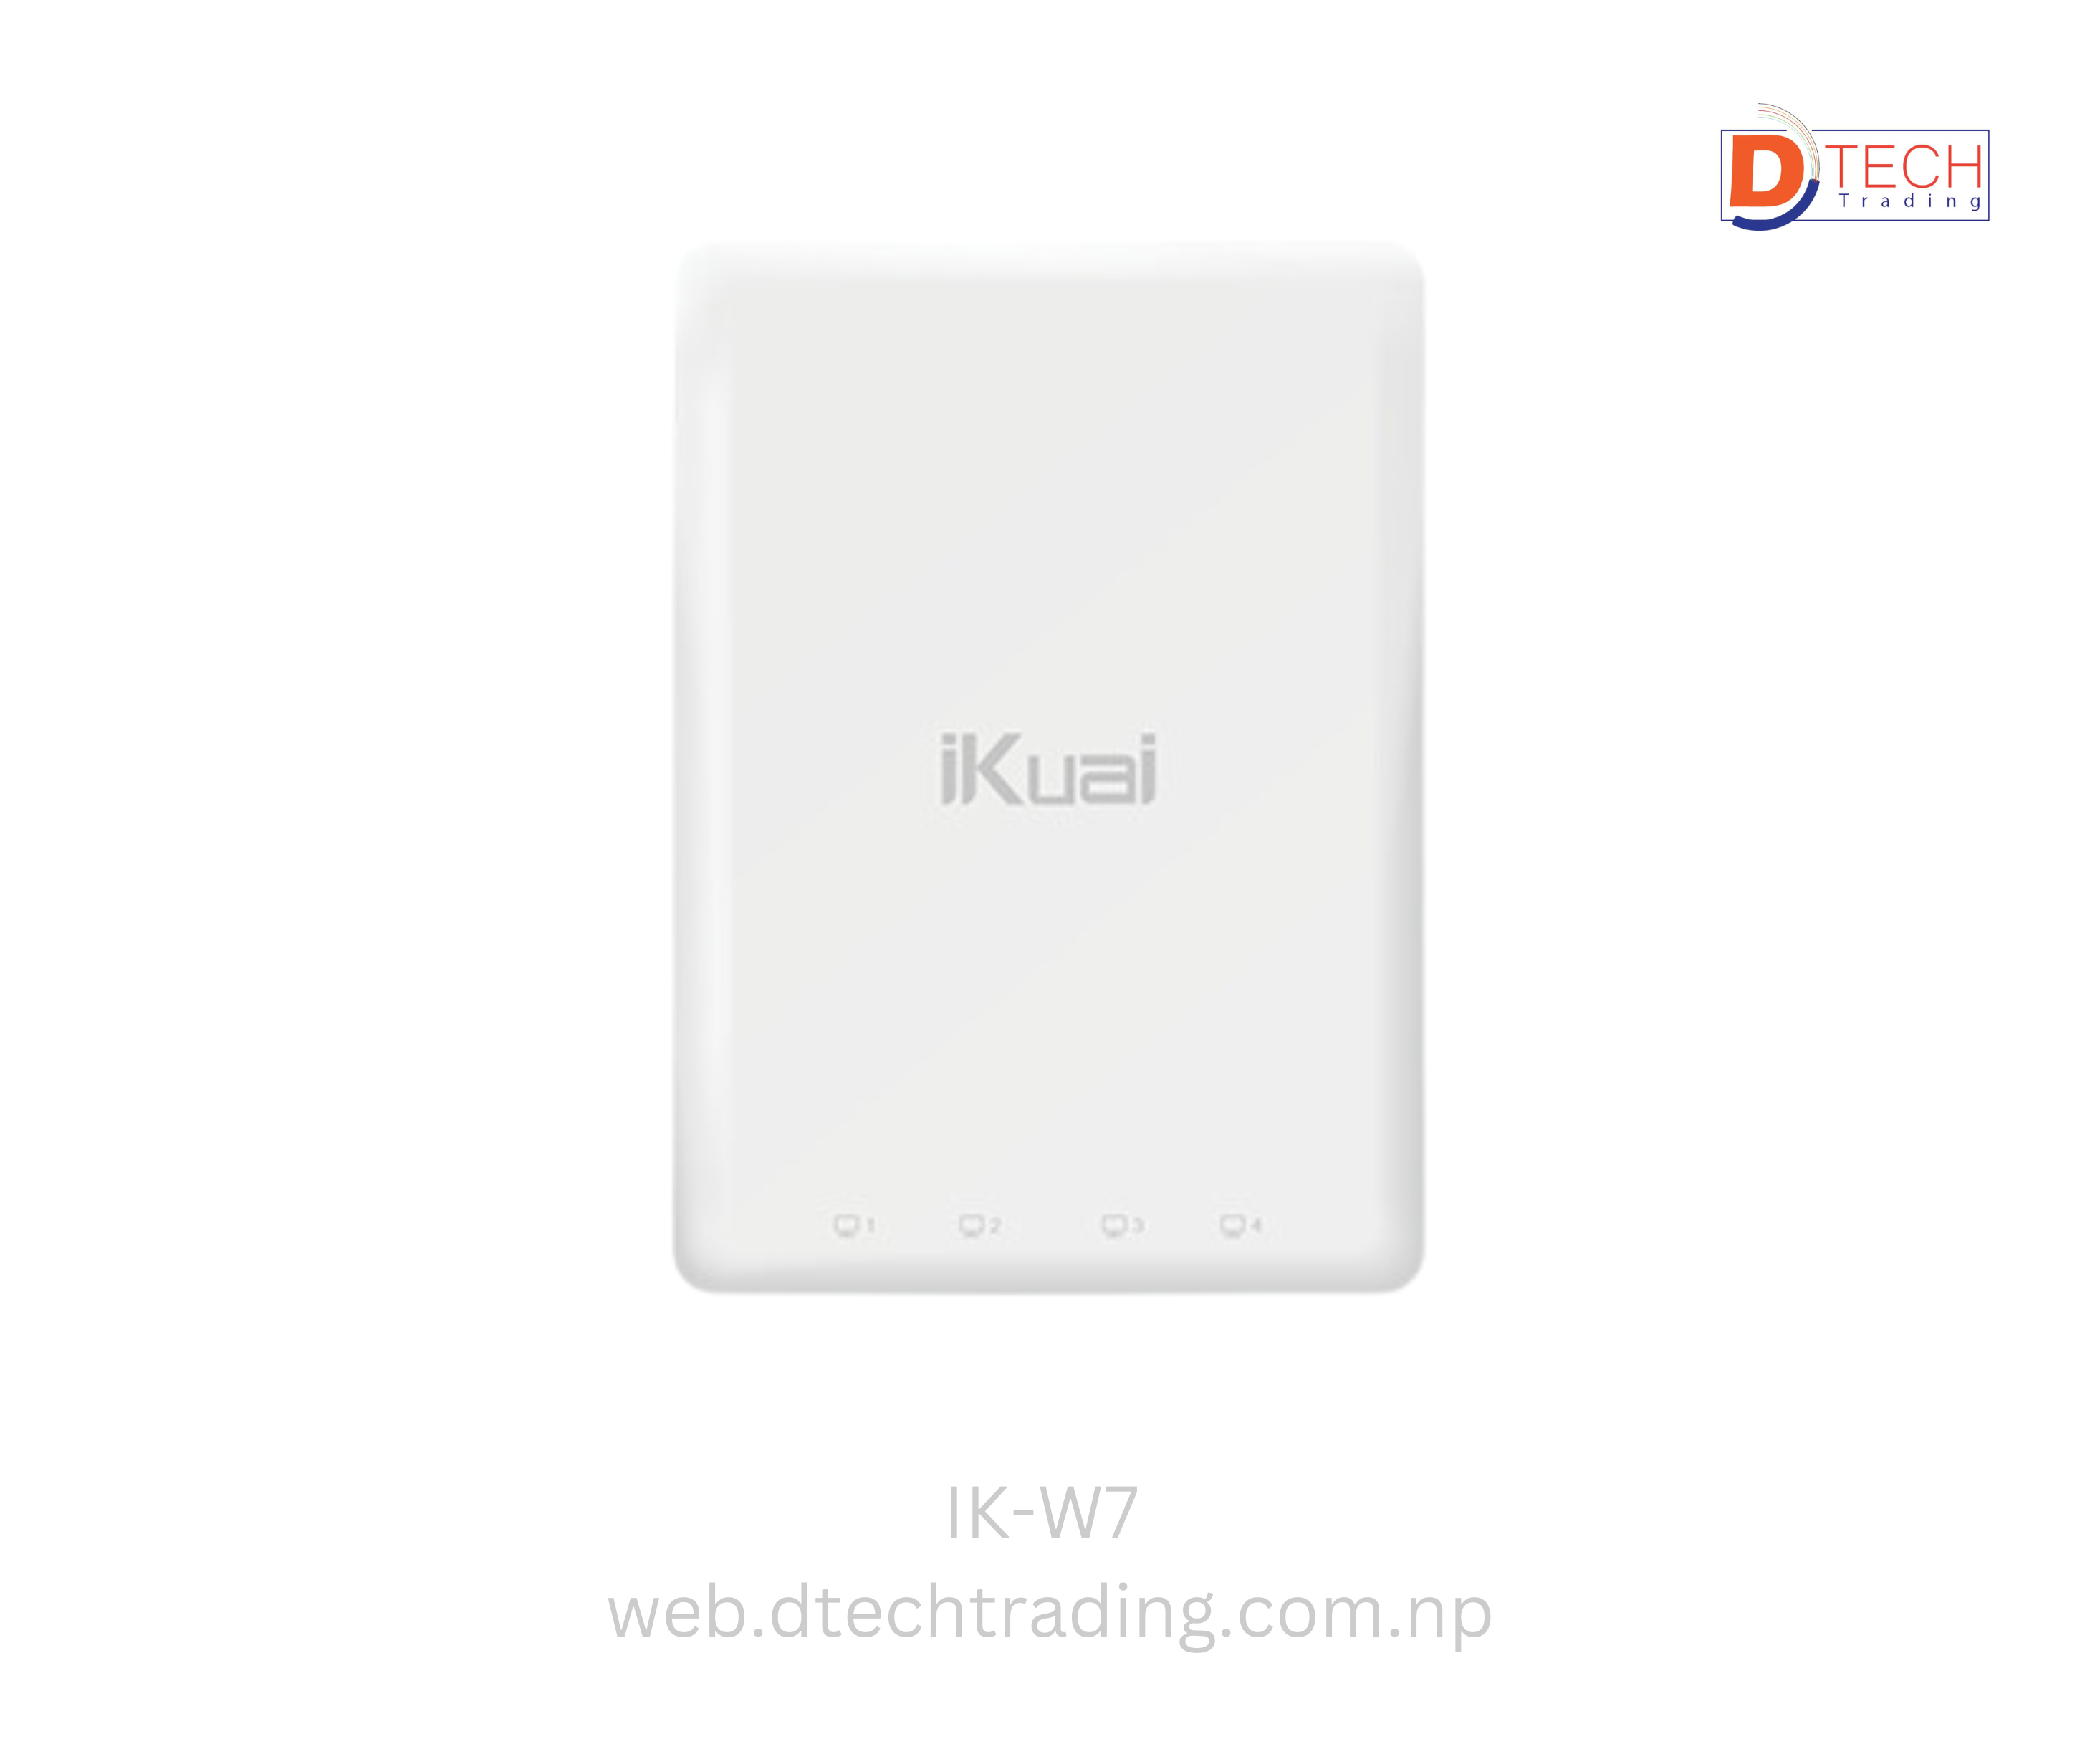 IK-W7 (11AC 1167Mbps Wireless Panel Access Point)